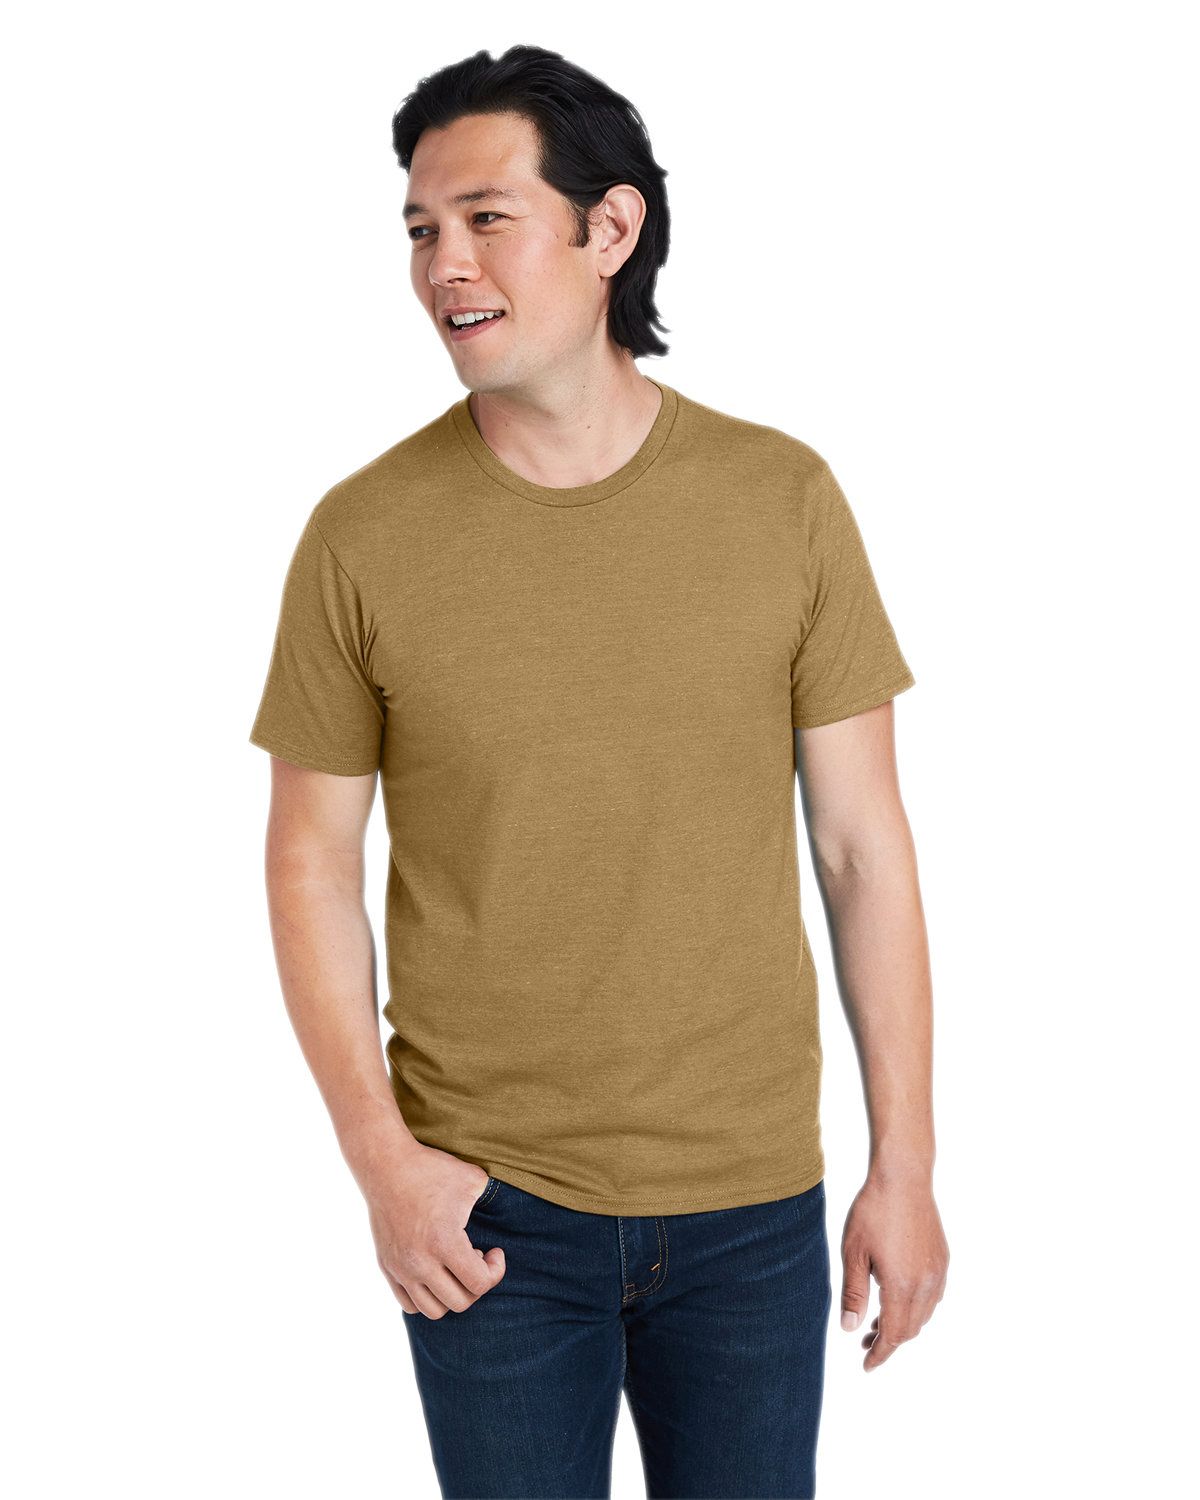 Hanes 4980 Unisex Ringspun Cotton T-Shirt